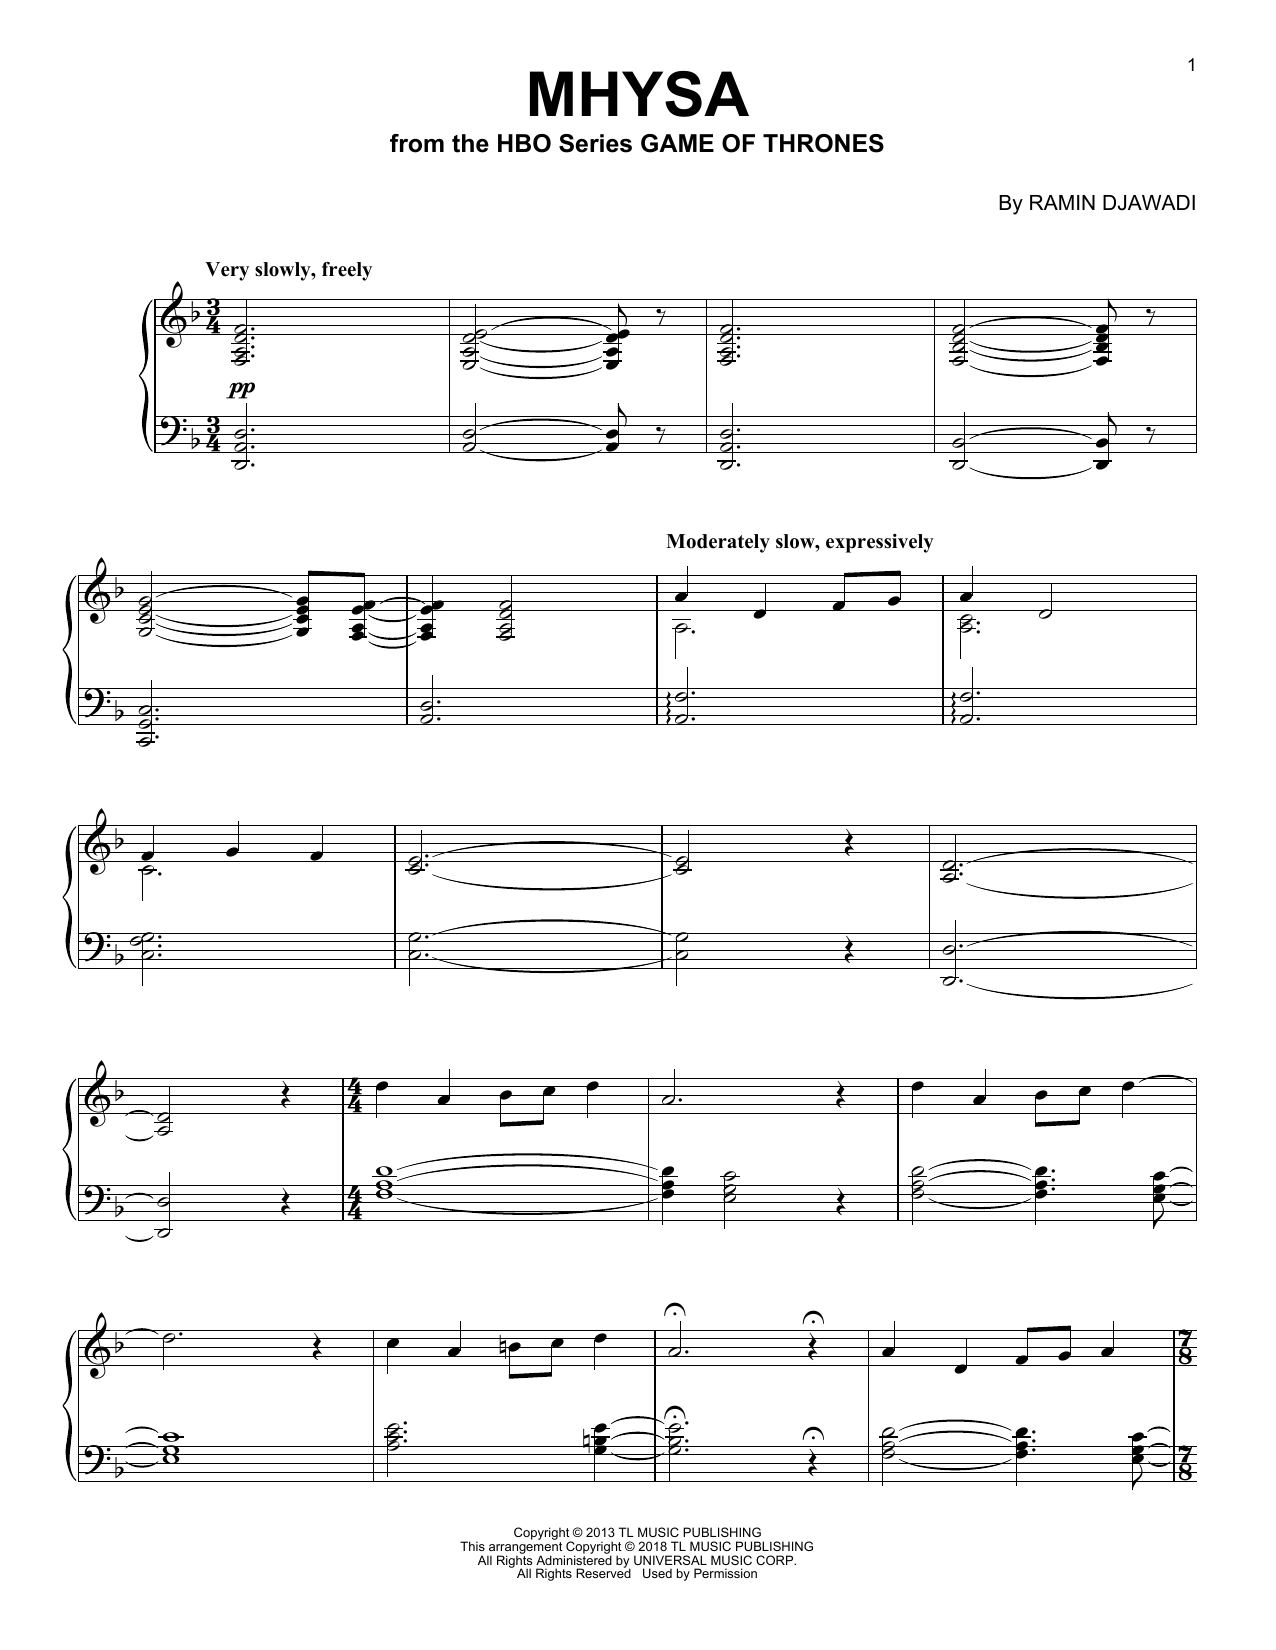 Ramin Djawadi Mhysa (from Game of Thrones) Sheet Music Notes & Chords for Solo Guitar Tab - Download or Print PDF